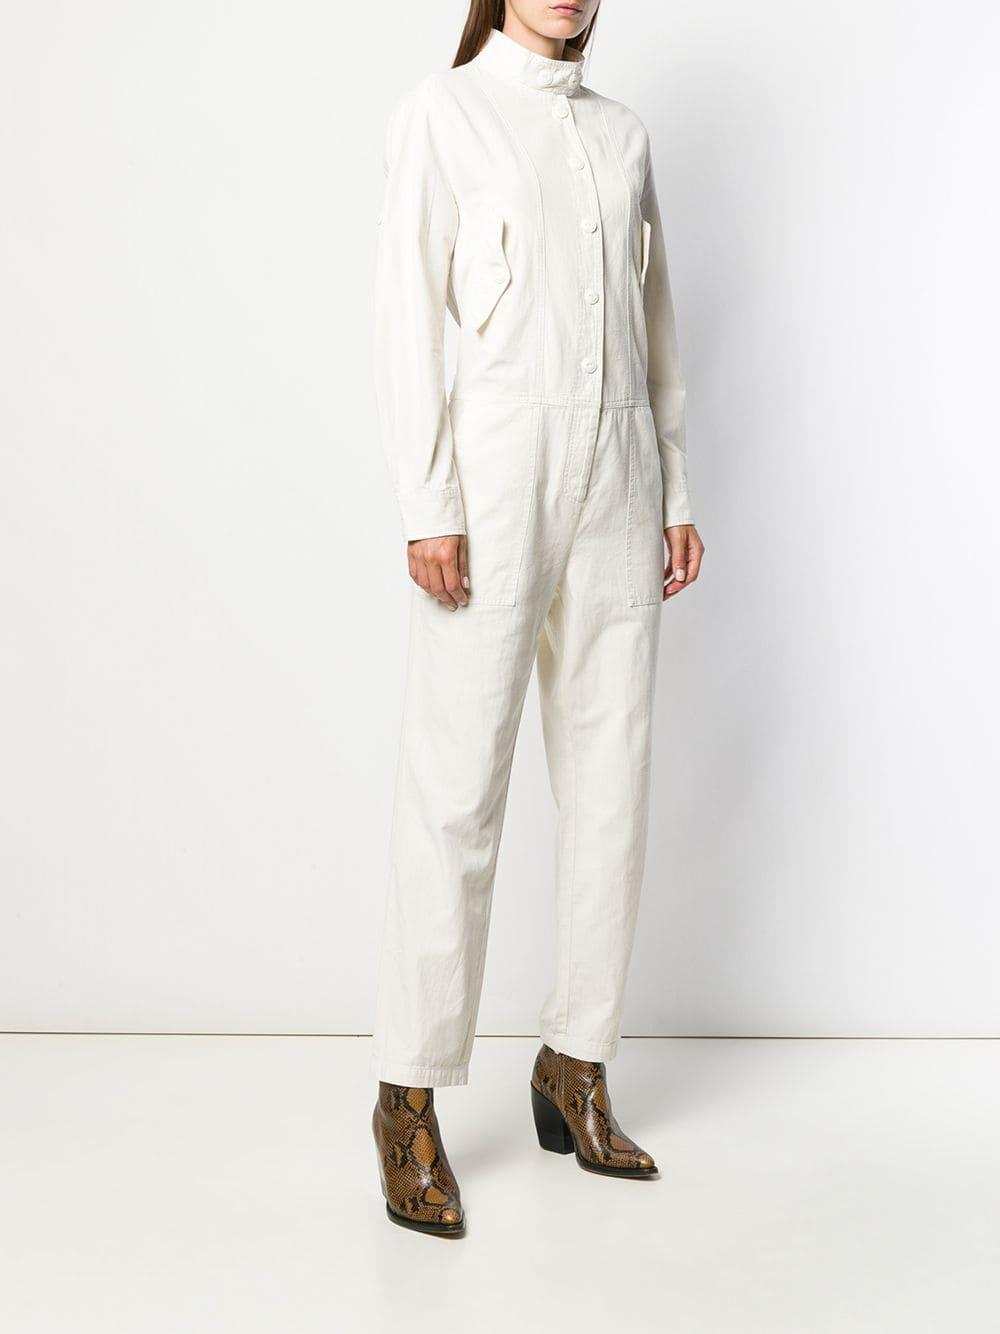 Rag & Bone Cotton Morris Jumpsuit in White - Lyst